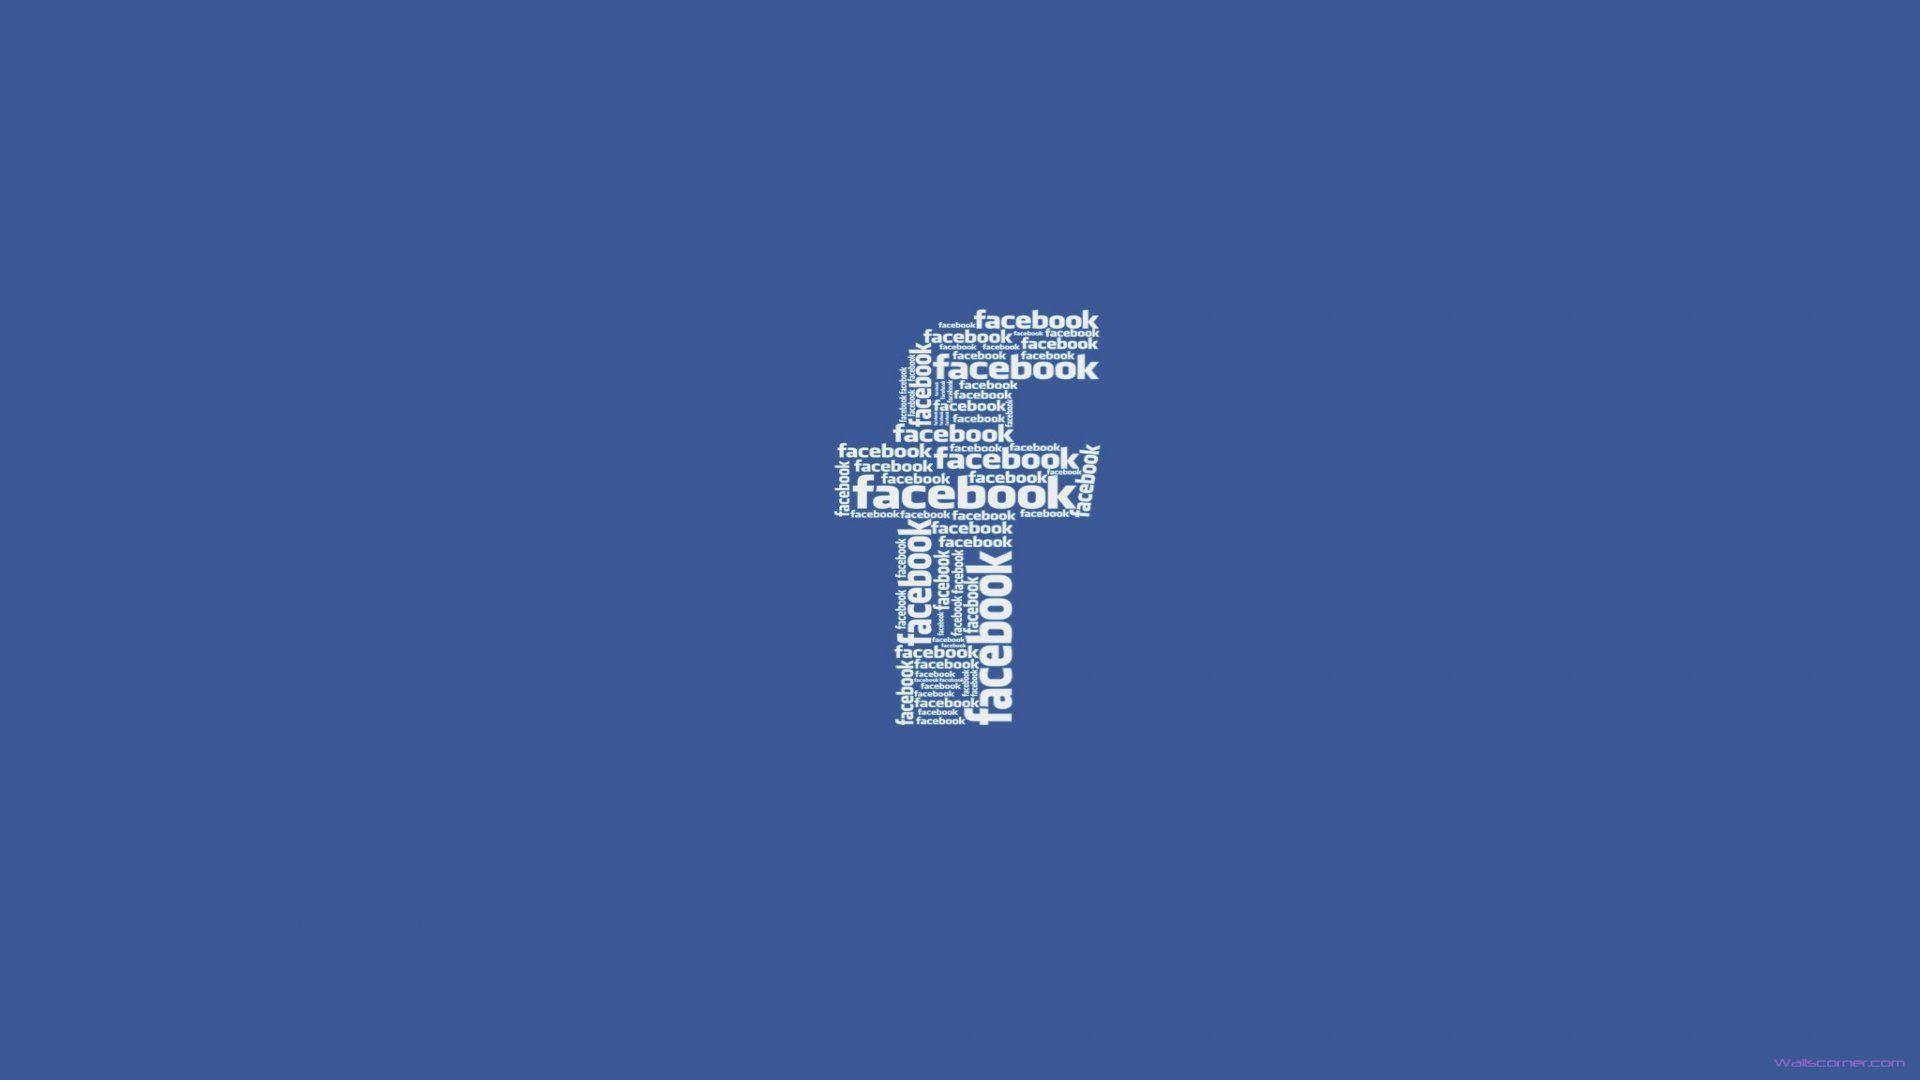 Facebook Logo Black